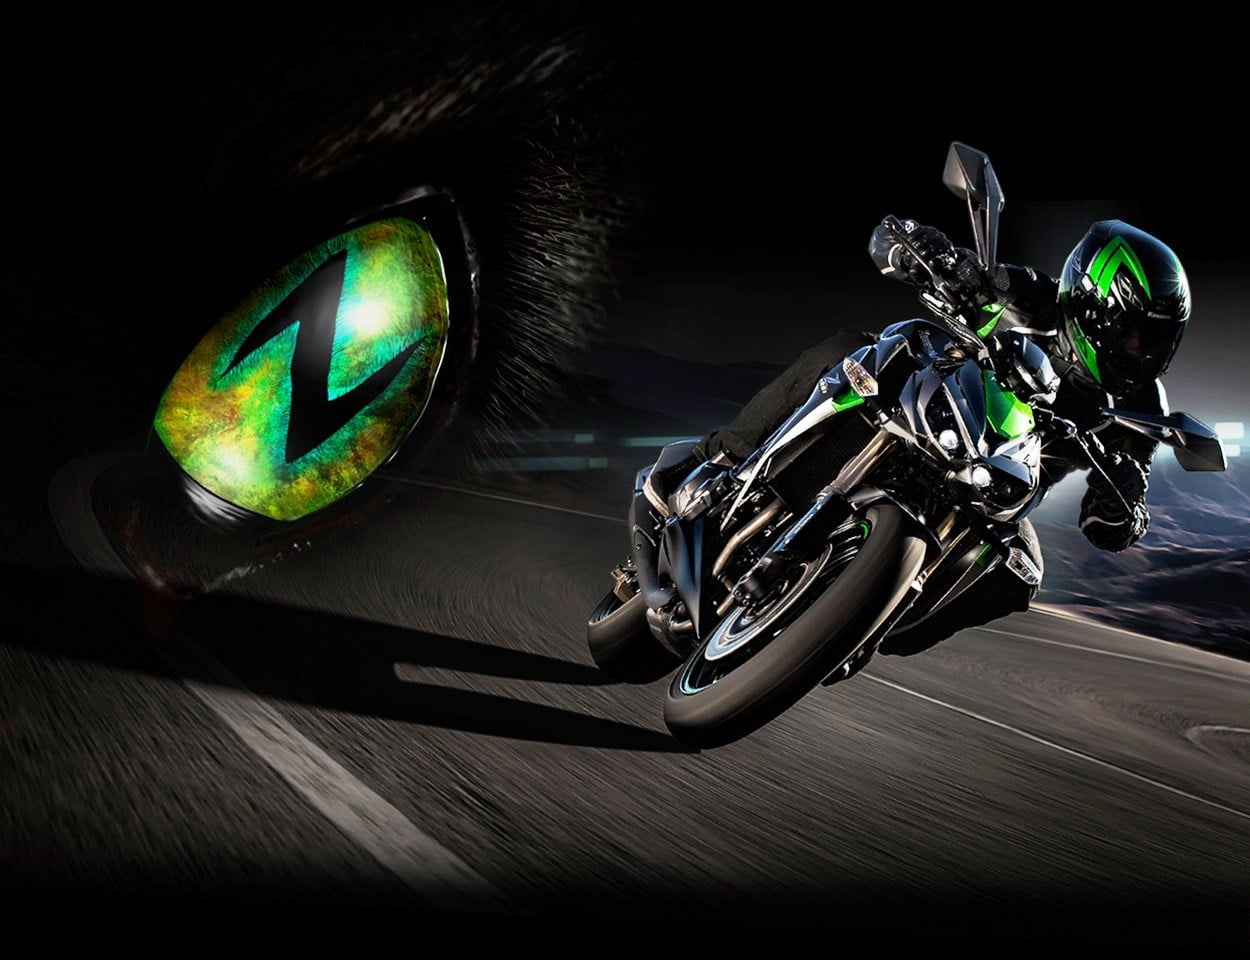 Wallpaper motorcycle fountain stones bike kawasaki Z1000 images for  desktop section мотоциклы  download